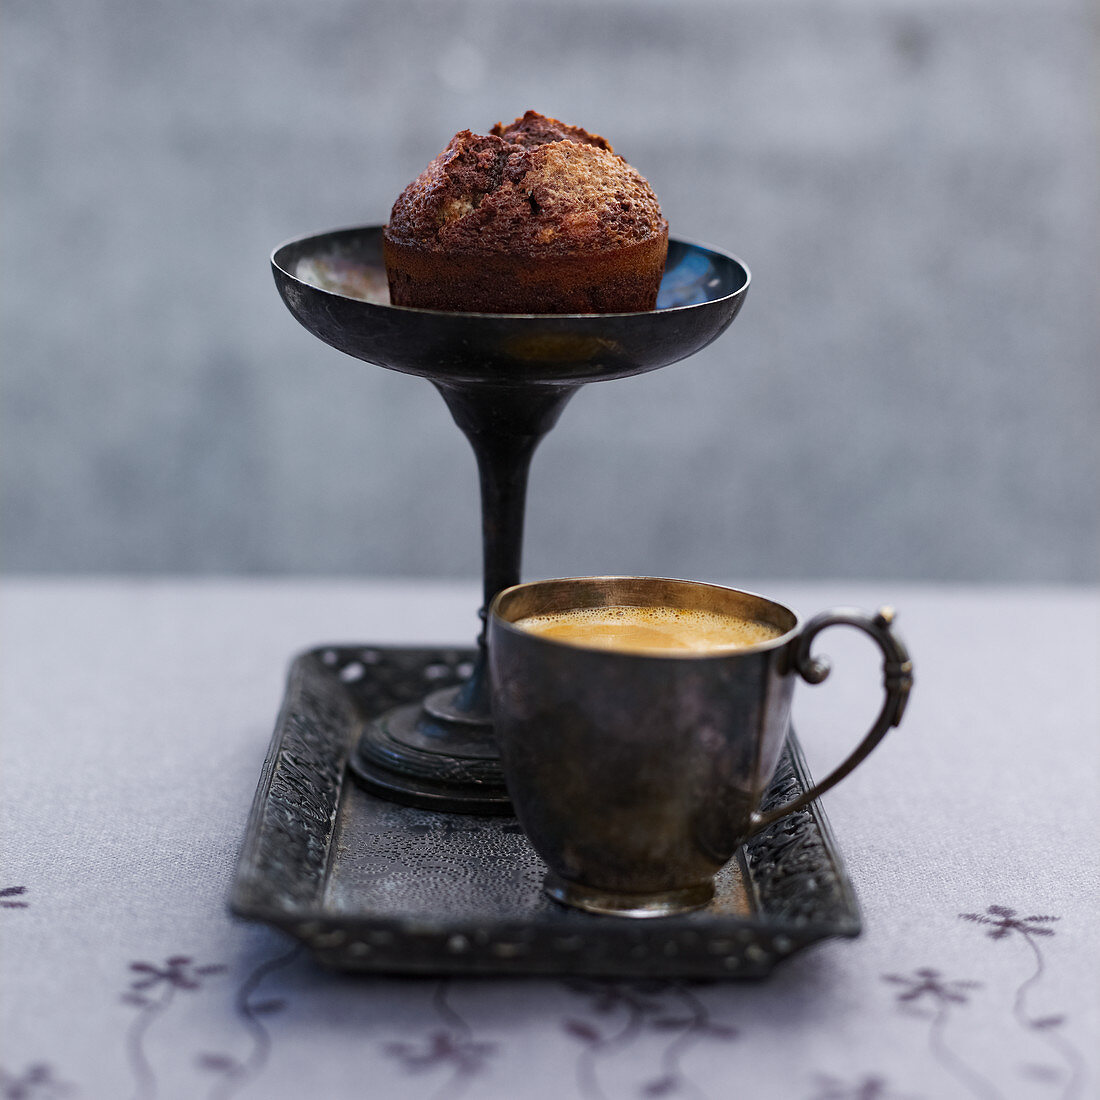 Mini-Marmorkuchen nach Moelleux-Art zum Cappuccino